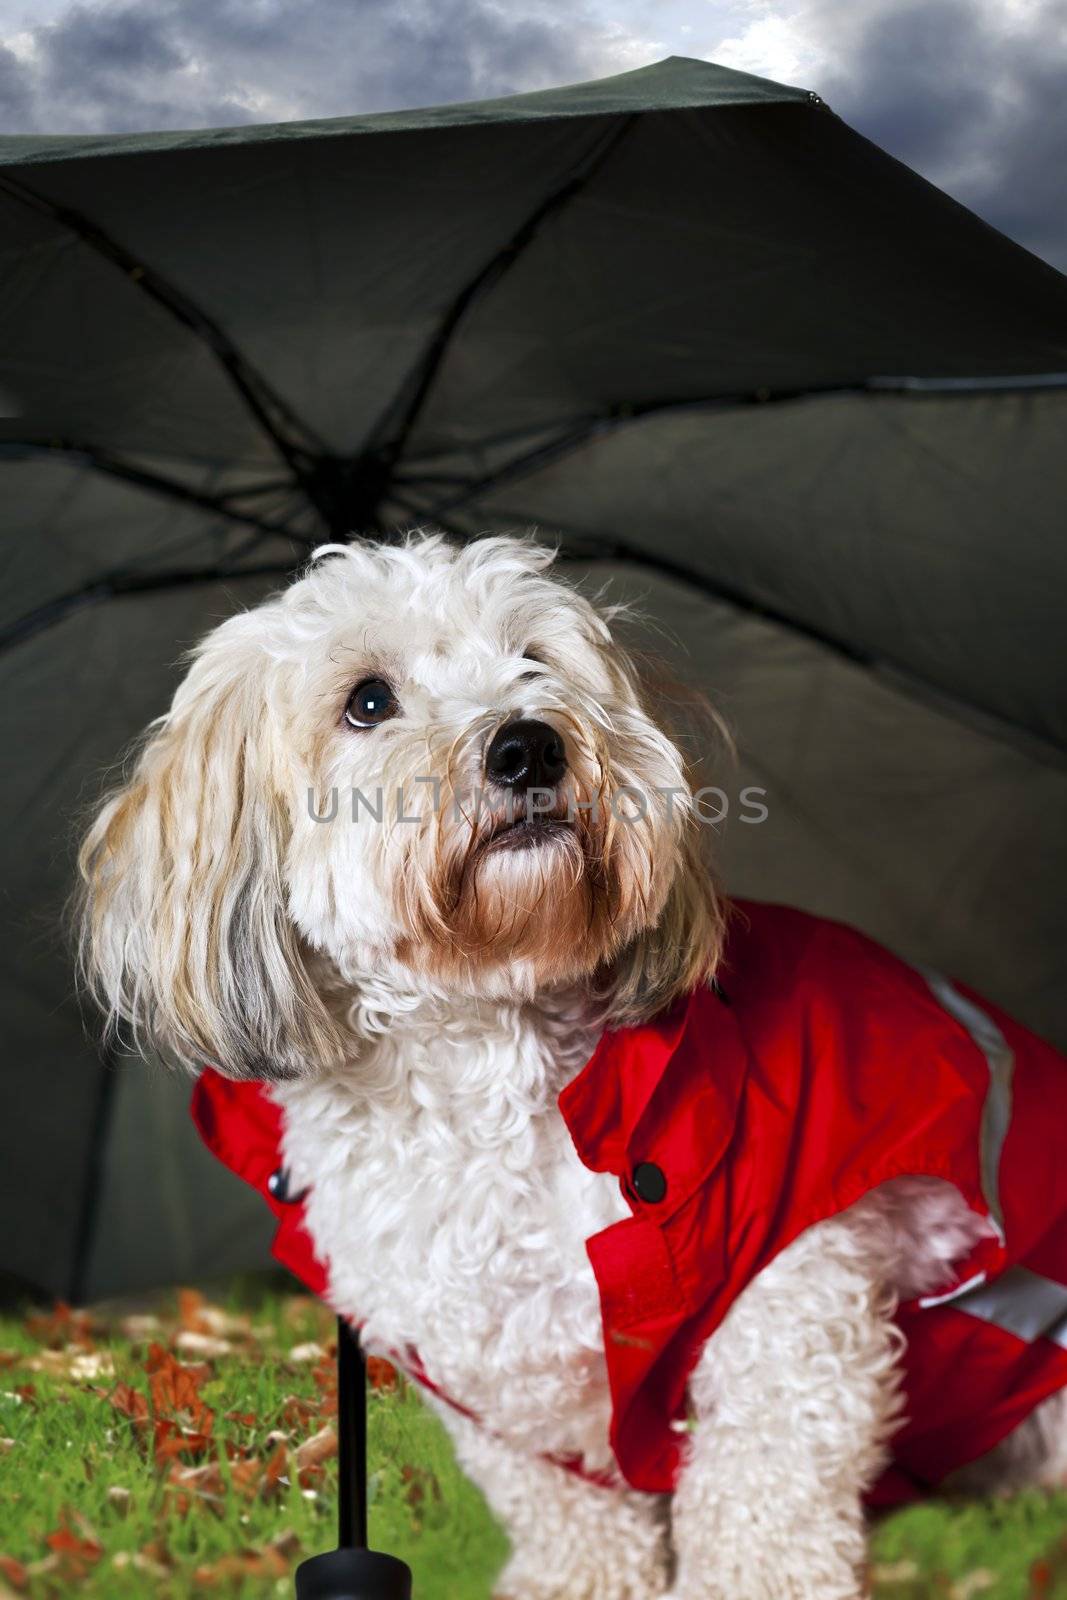 Cute dog under umbrella by elenathewise